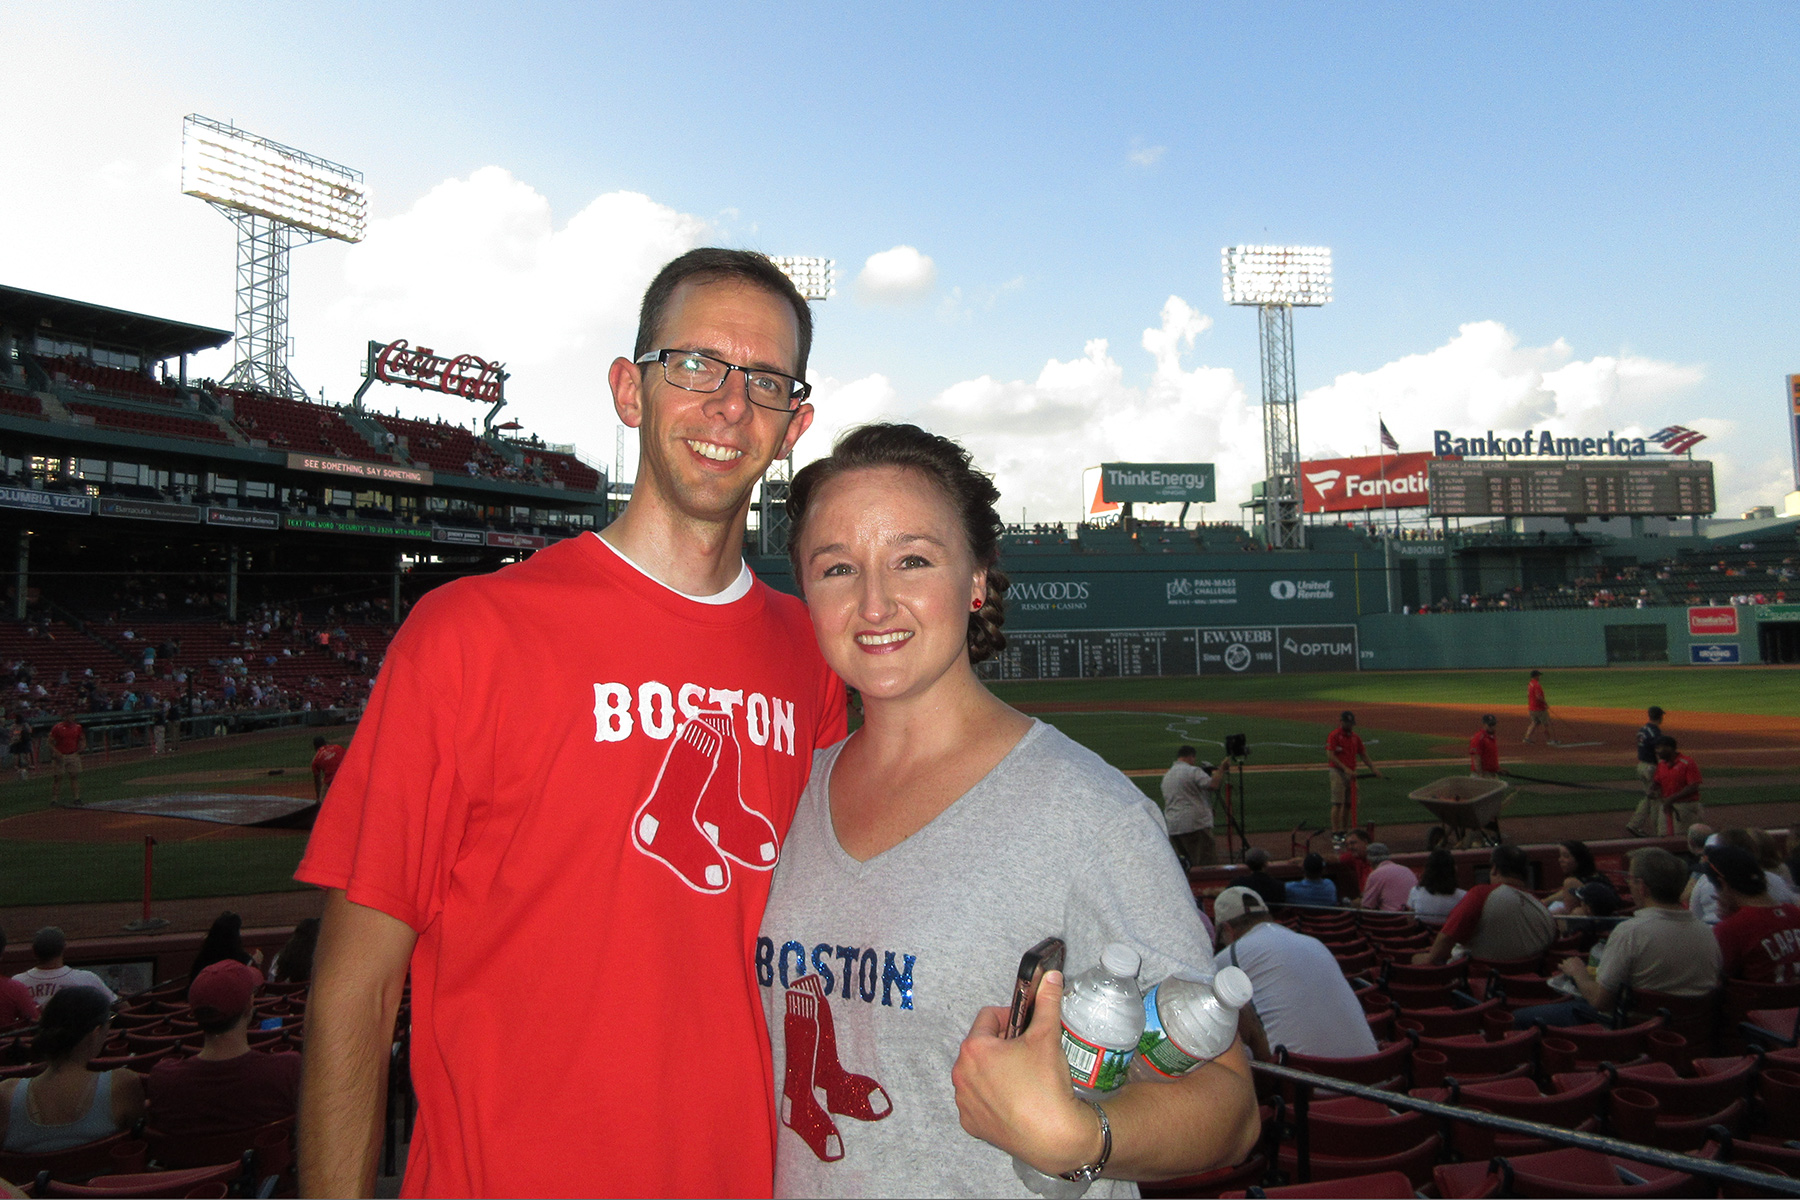  Boston Shirt - Fenway Park Green Monster : Sports & Outdoors